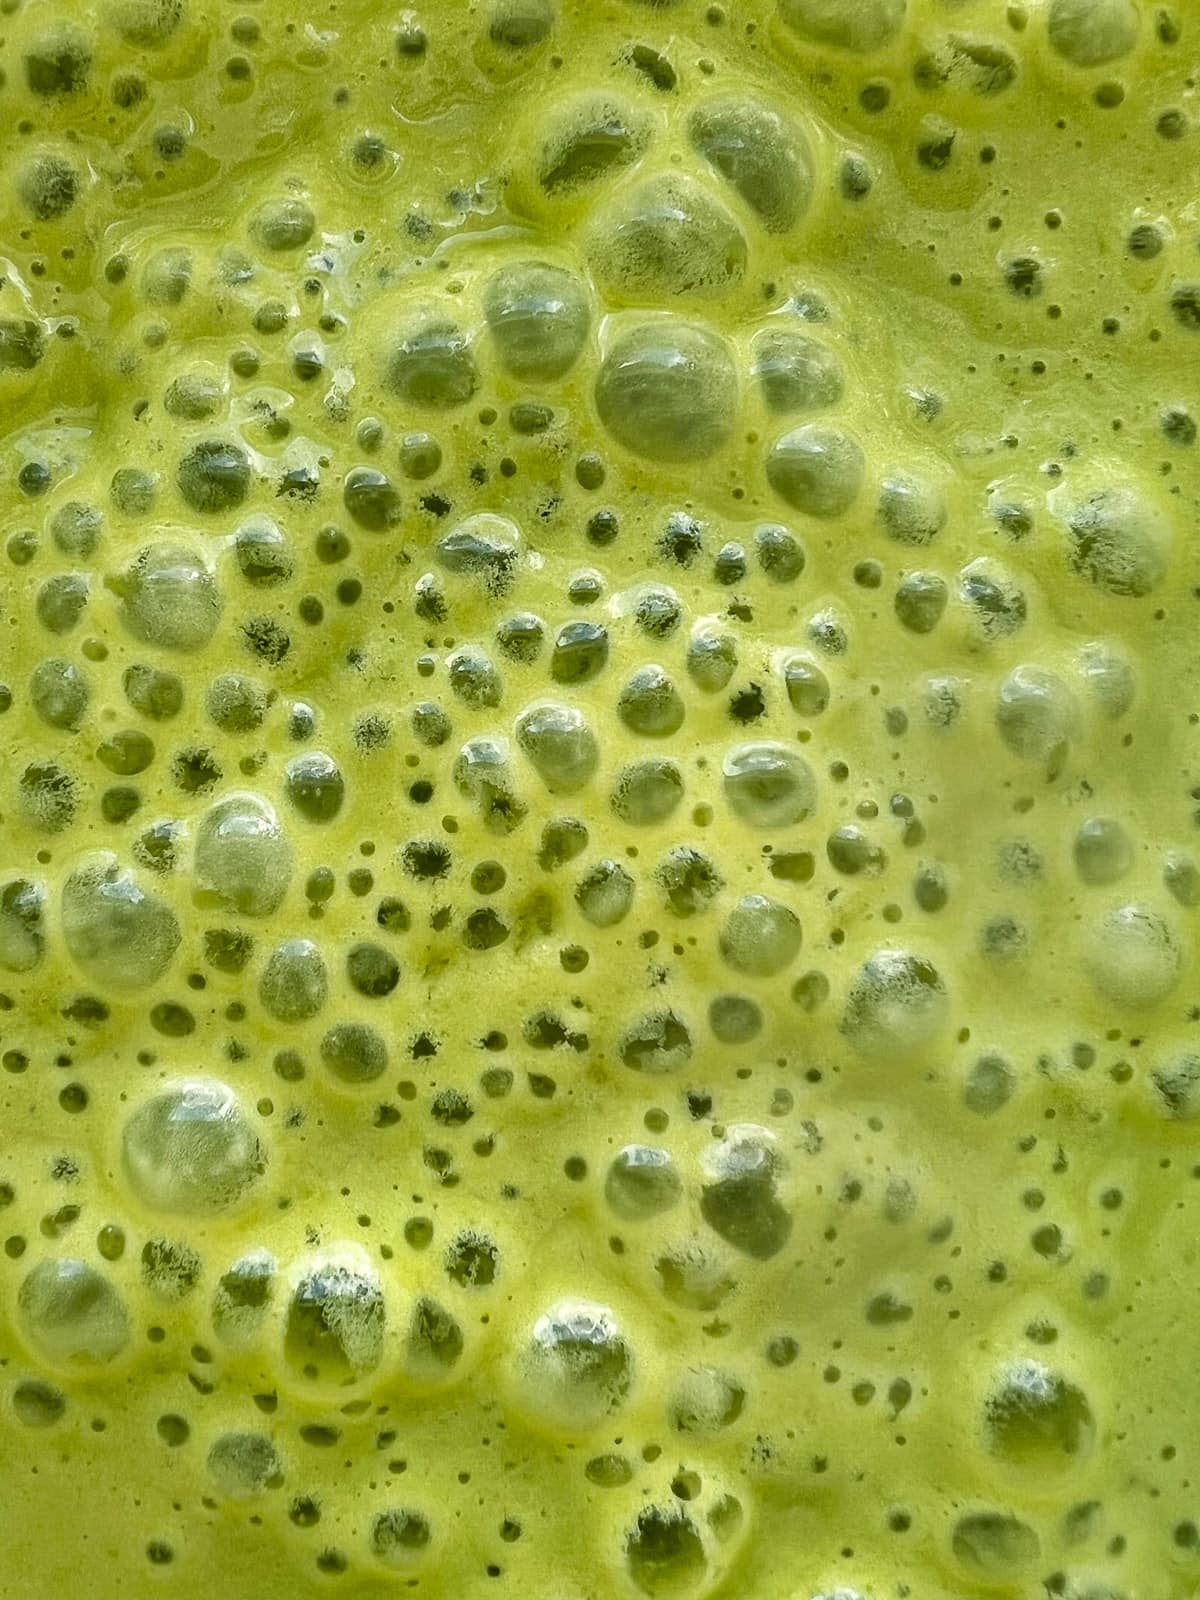 A close up image of a smoothie inside a blender.